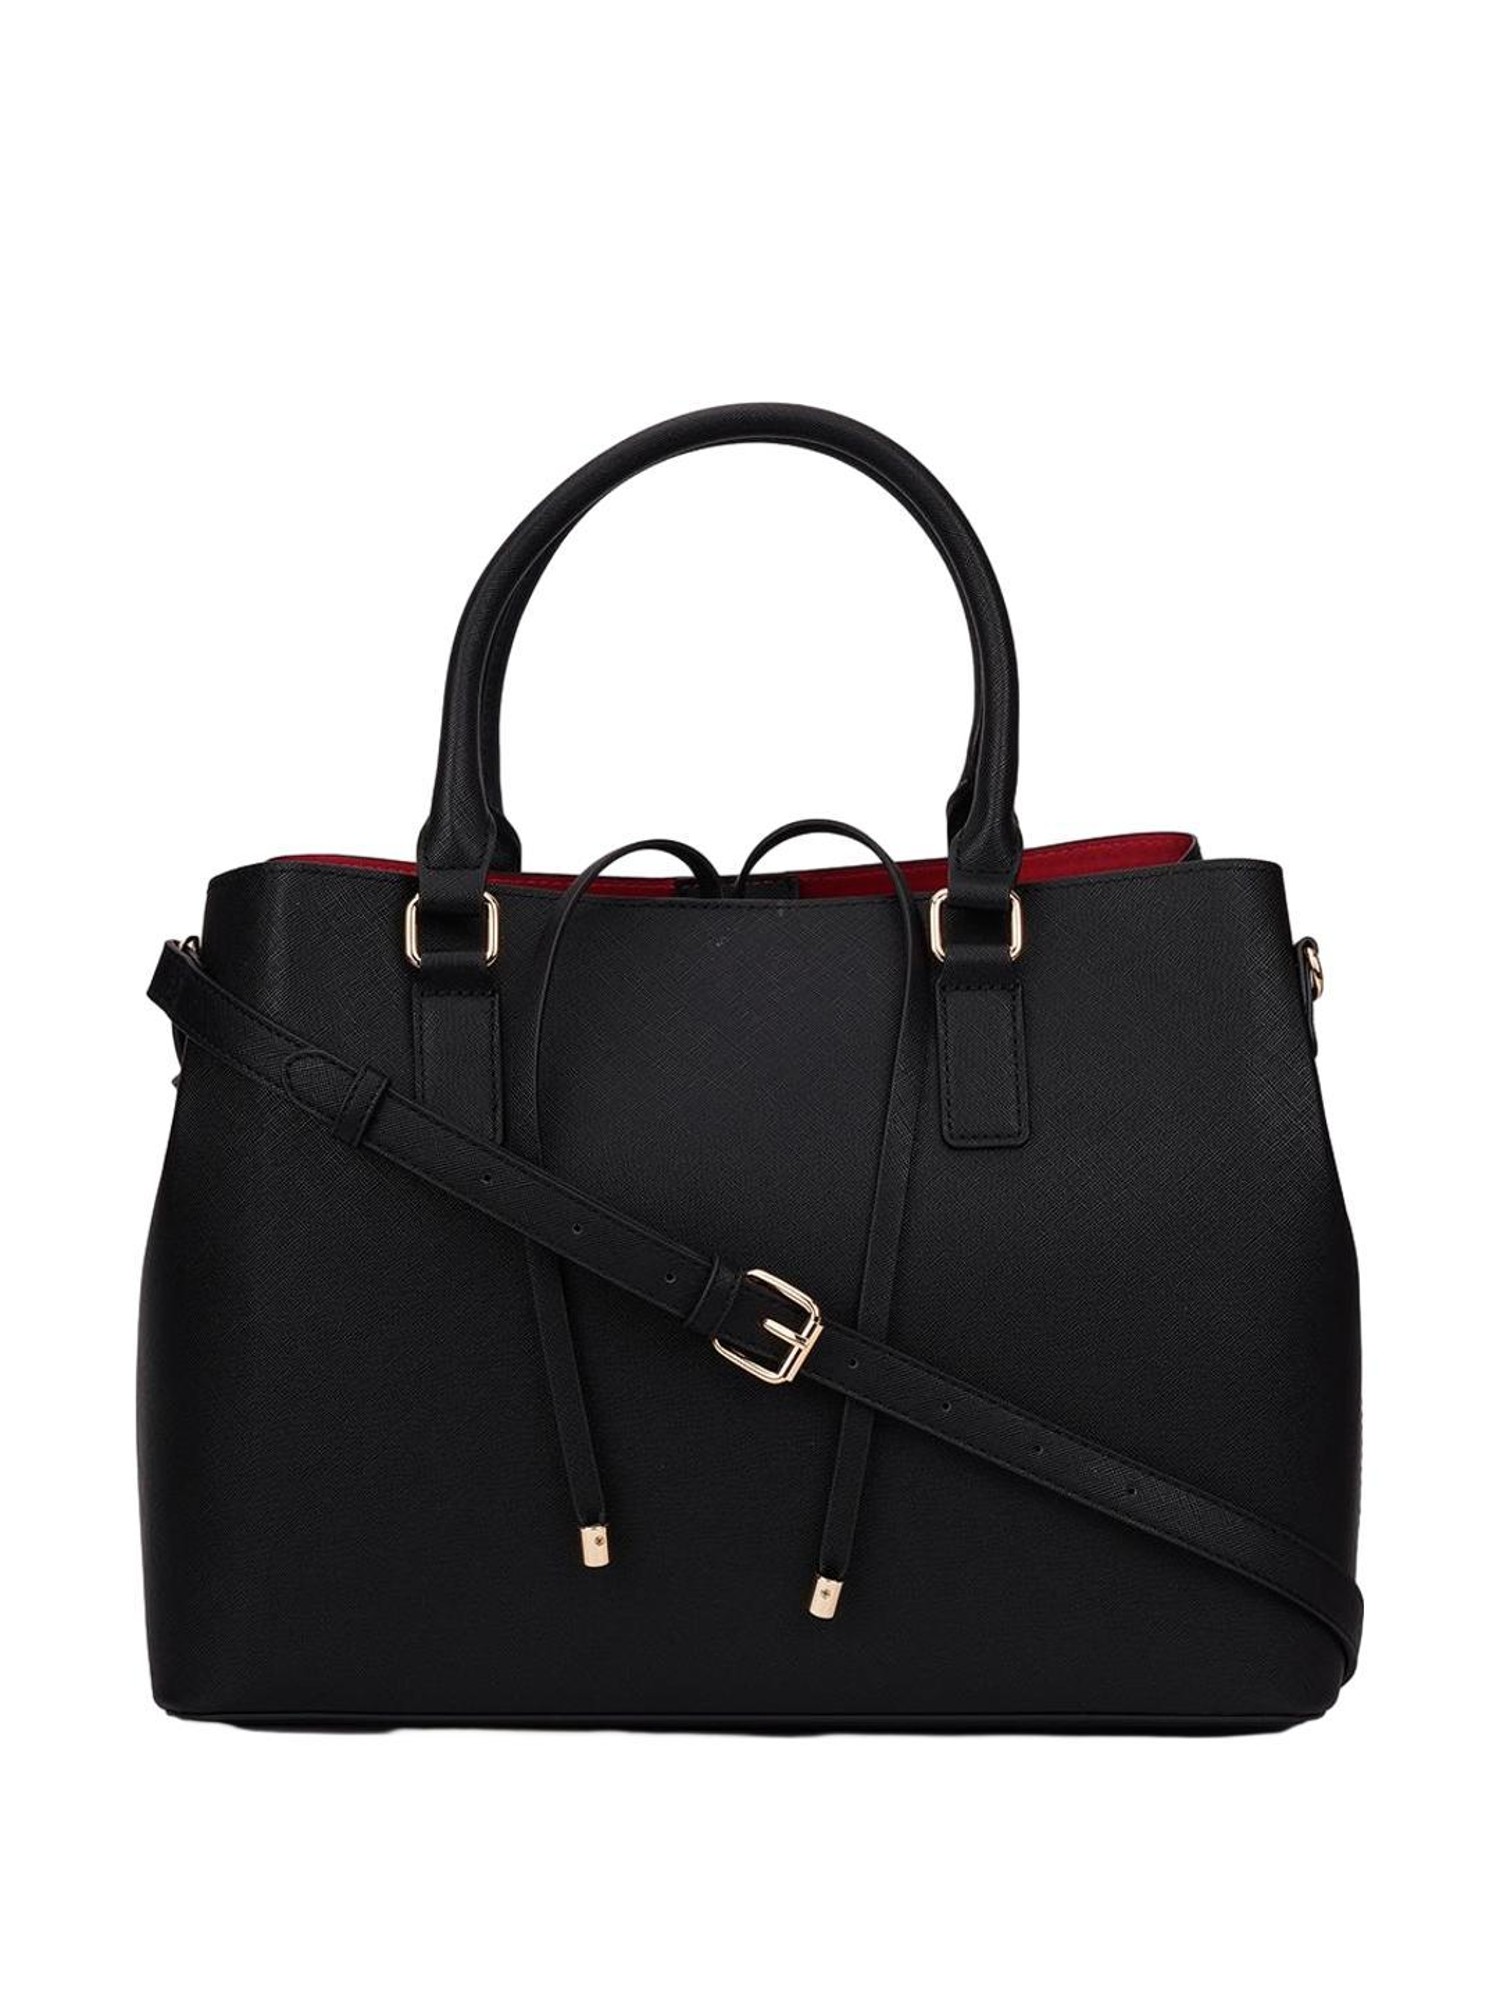 Buy ALDO Women Black Handbag Black Online @ Best Price in India |  Flipkart.com